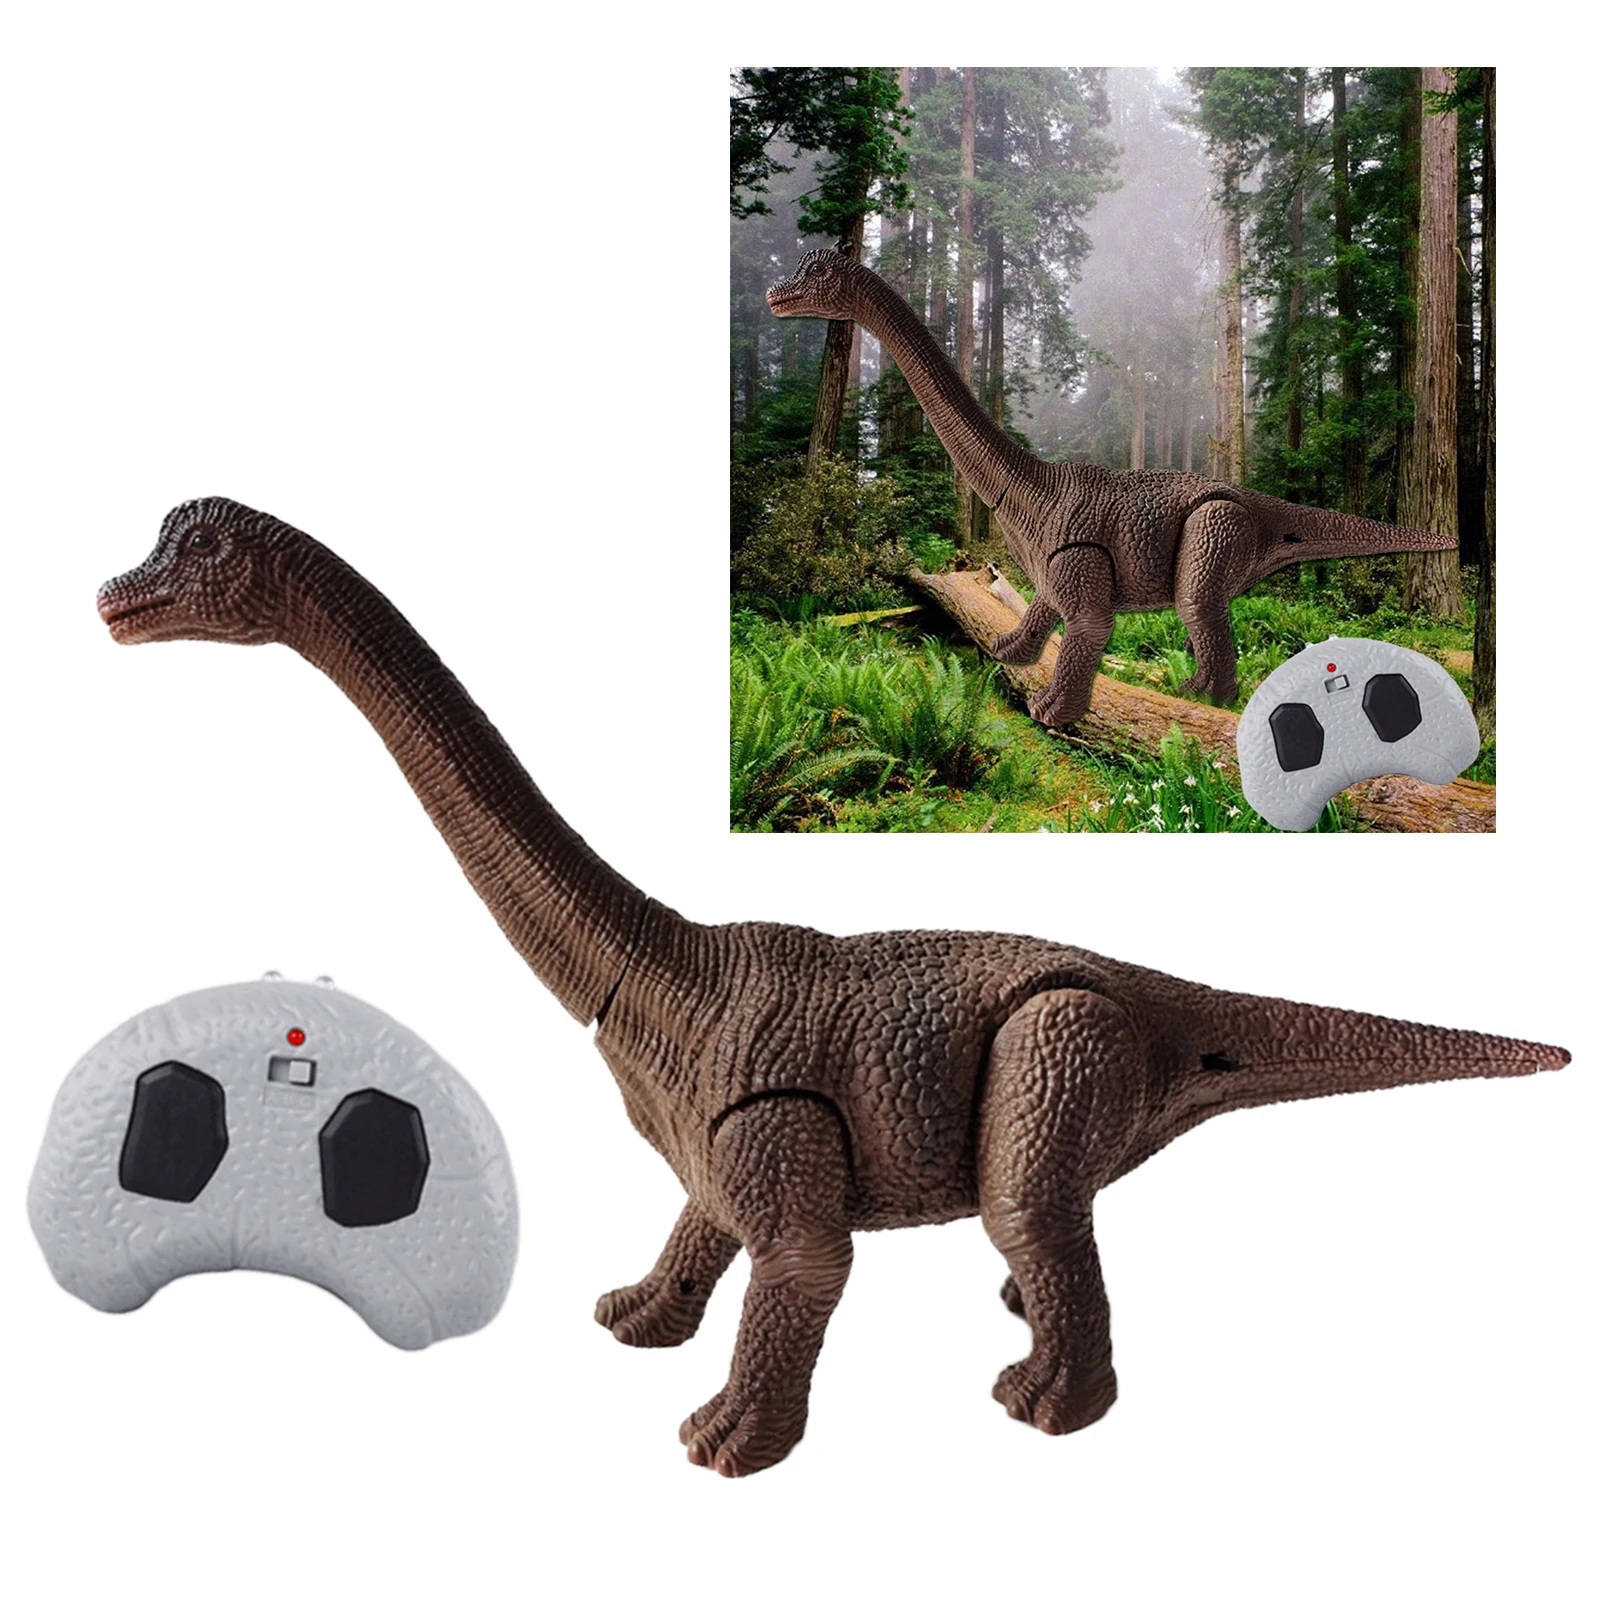 Realistic RC Dinosaur Roaring Sounds 360 Rotation Stunt Age 3 4 5 6 7